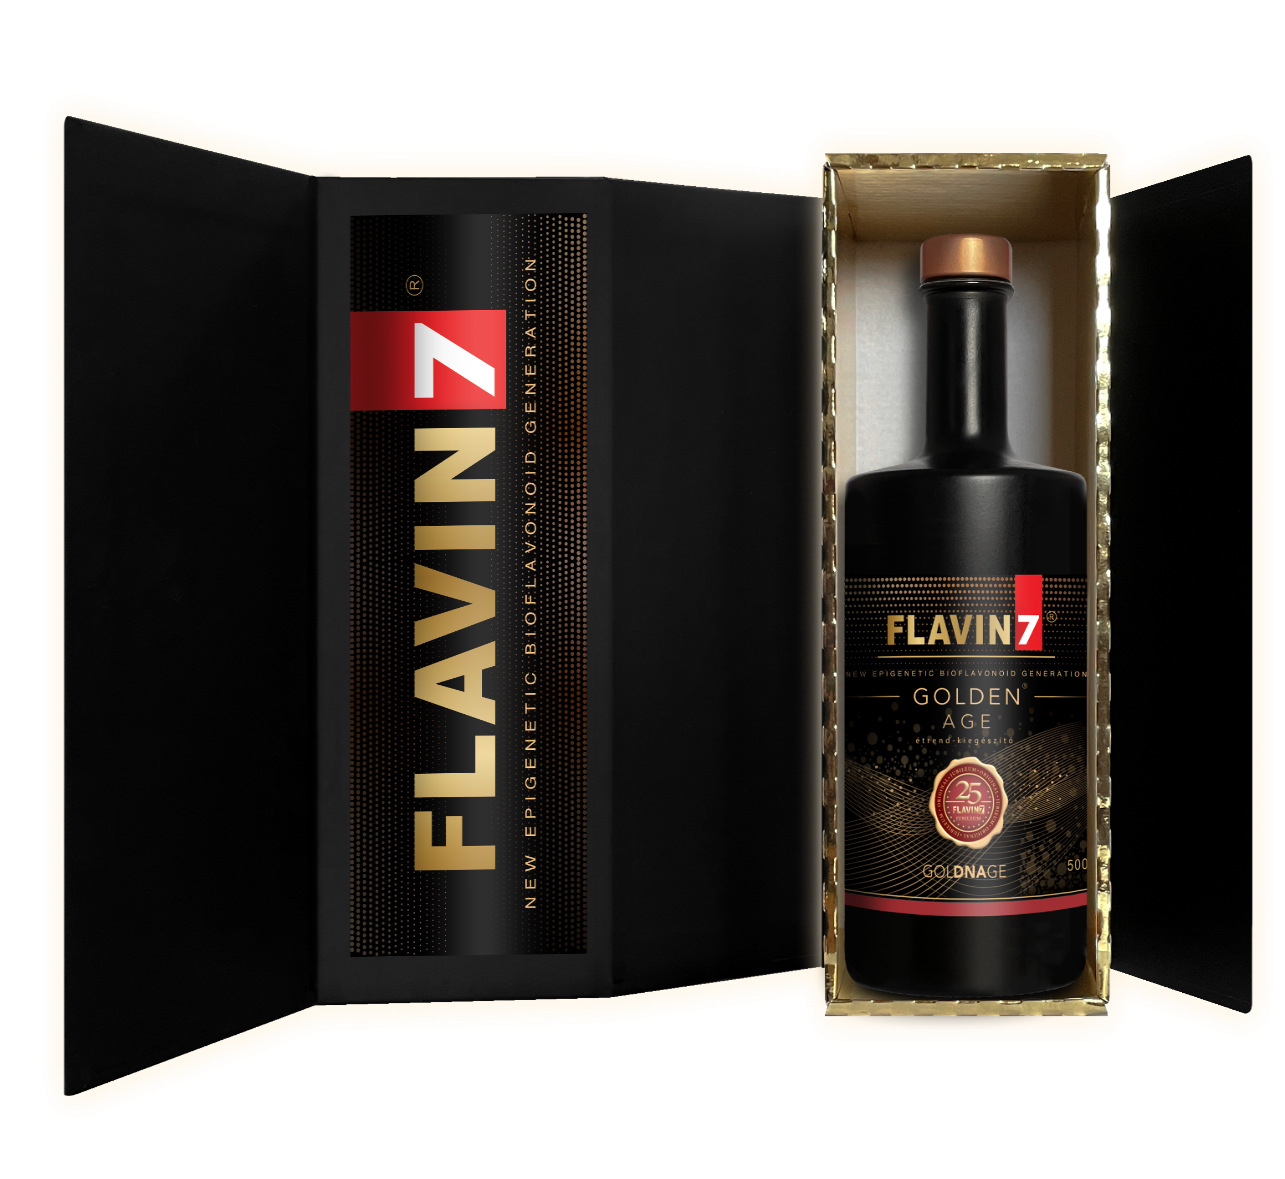 Flavin7 GOLDEN AGE 500 ml